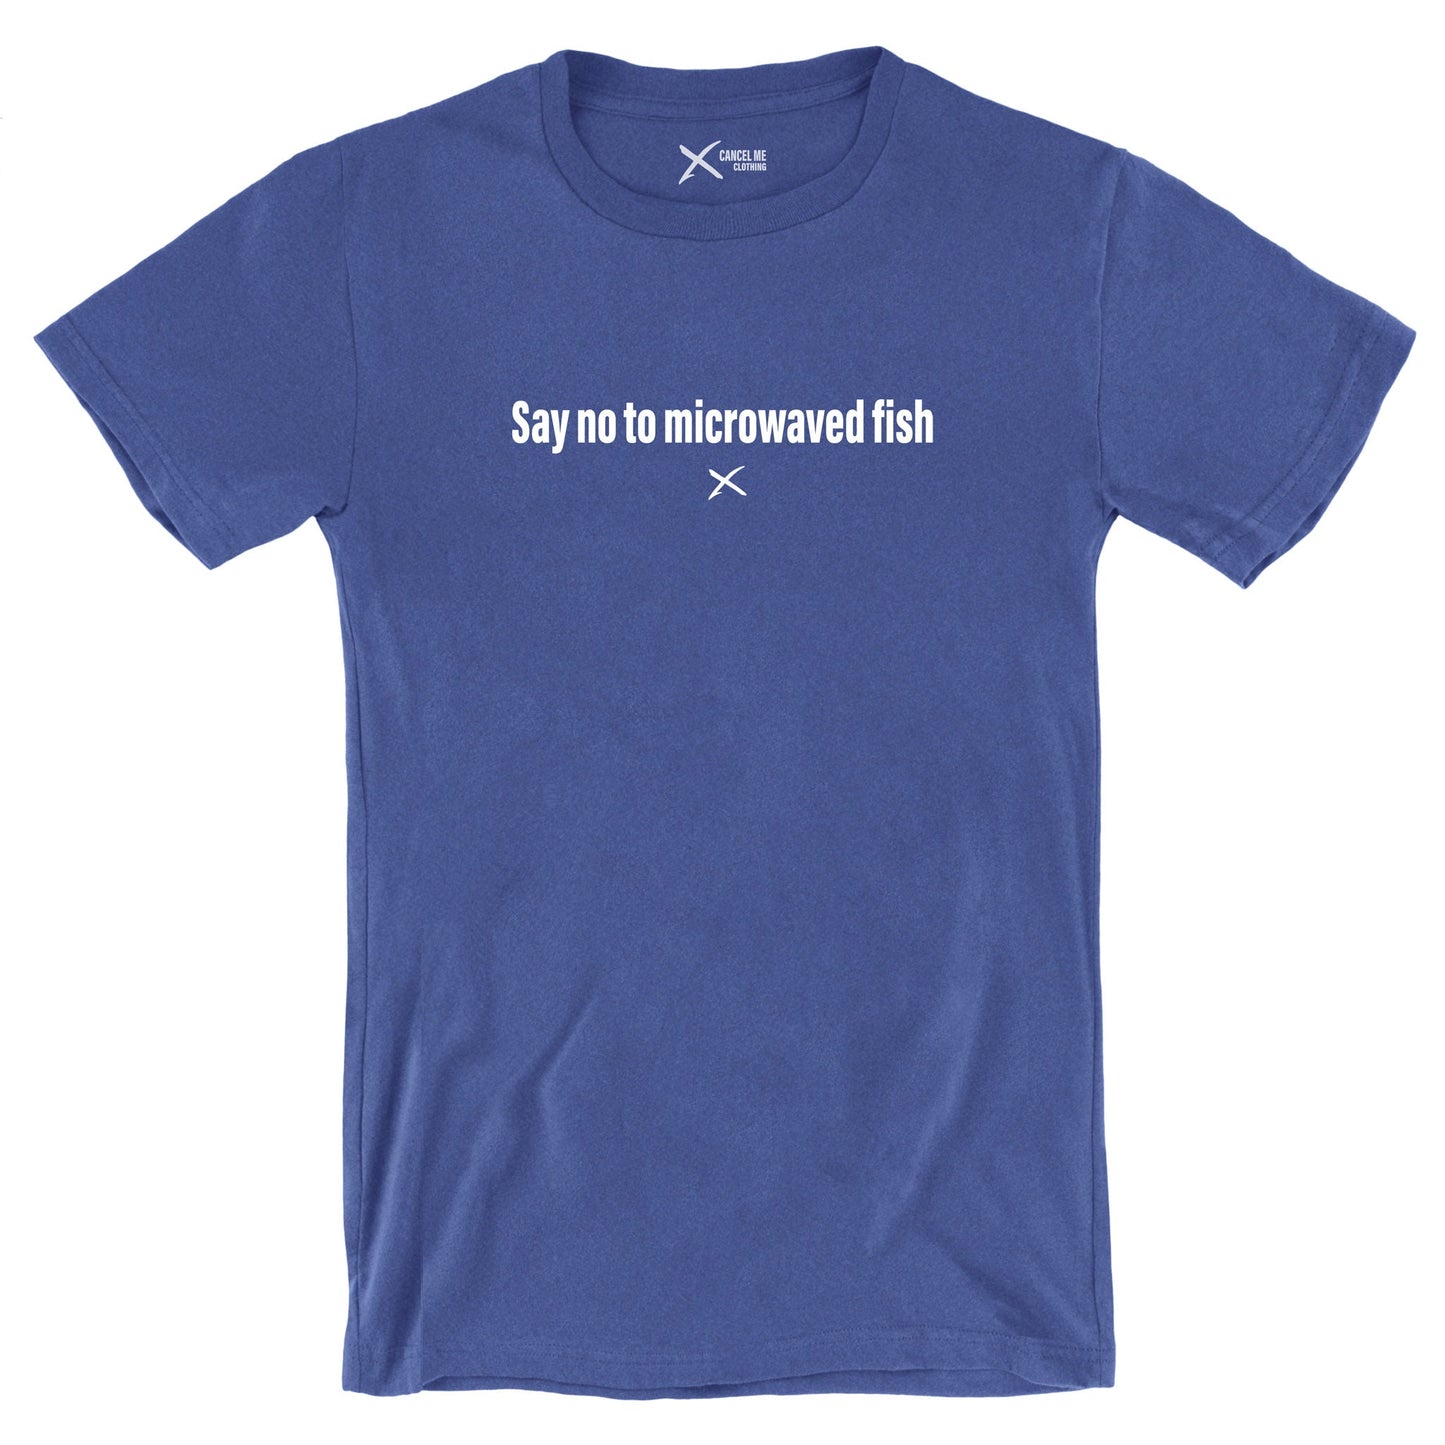 Say no to microwaved fish - Shirt